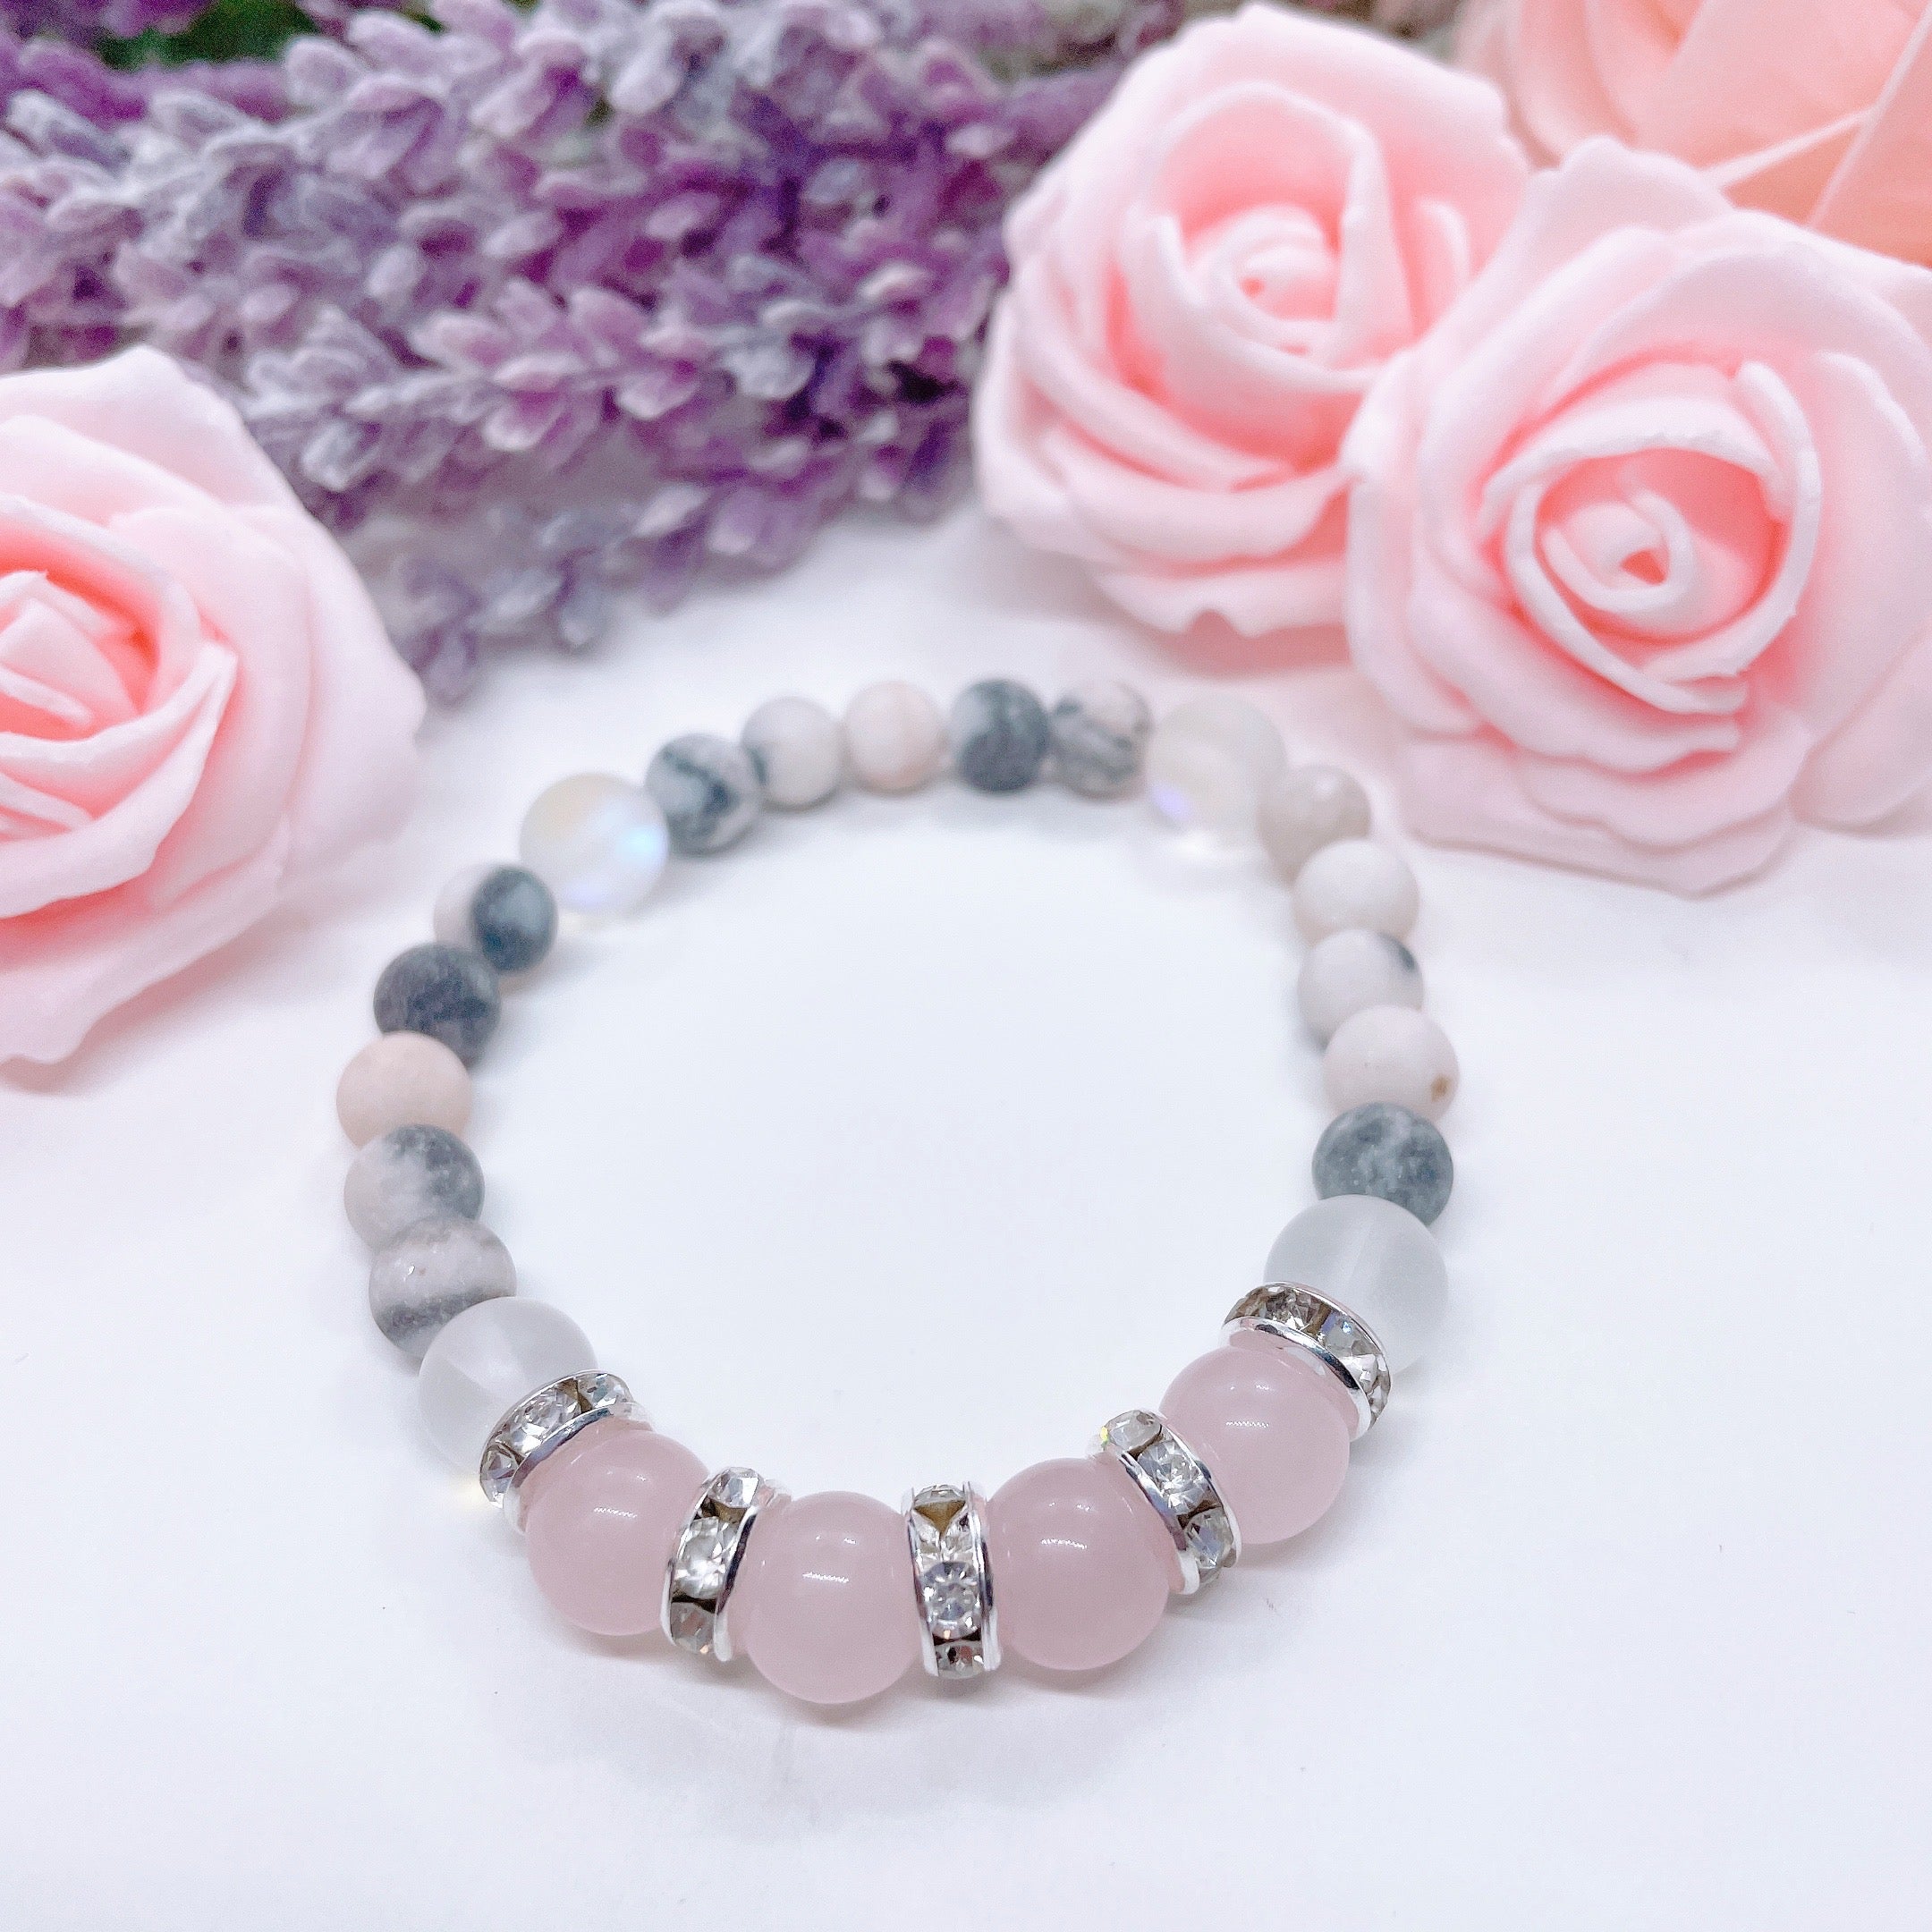 A Rose Quartz Rhinestone Companion Gemstone stretch bracelet made with 4 pink rose quartz gemstones, translucent aura beads, pink jasper gemstones, and rhinestone accents for added sparkle sits on a white table. 